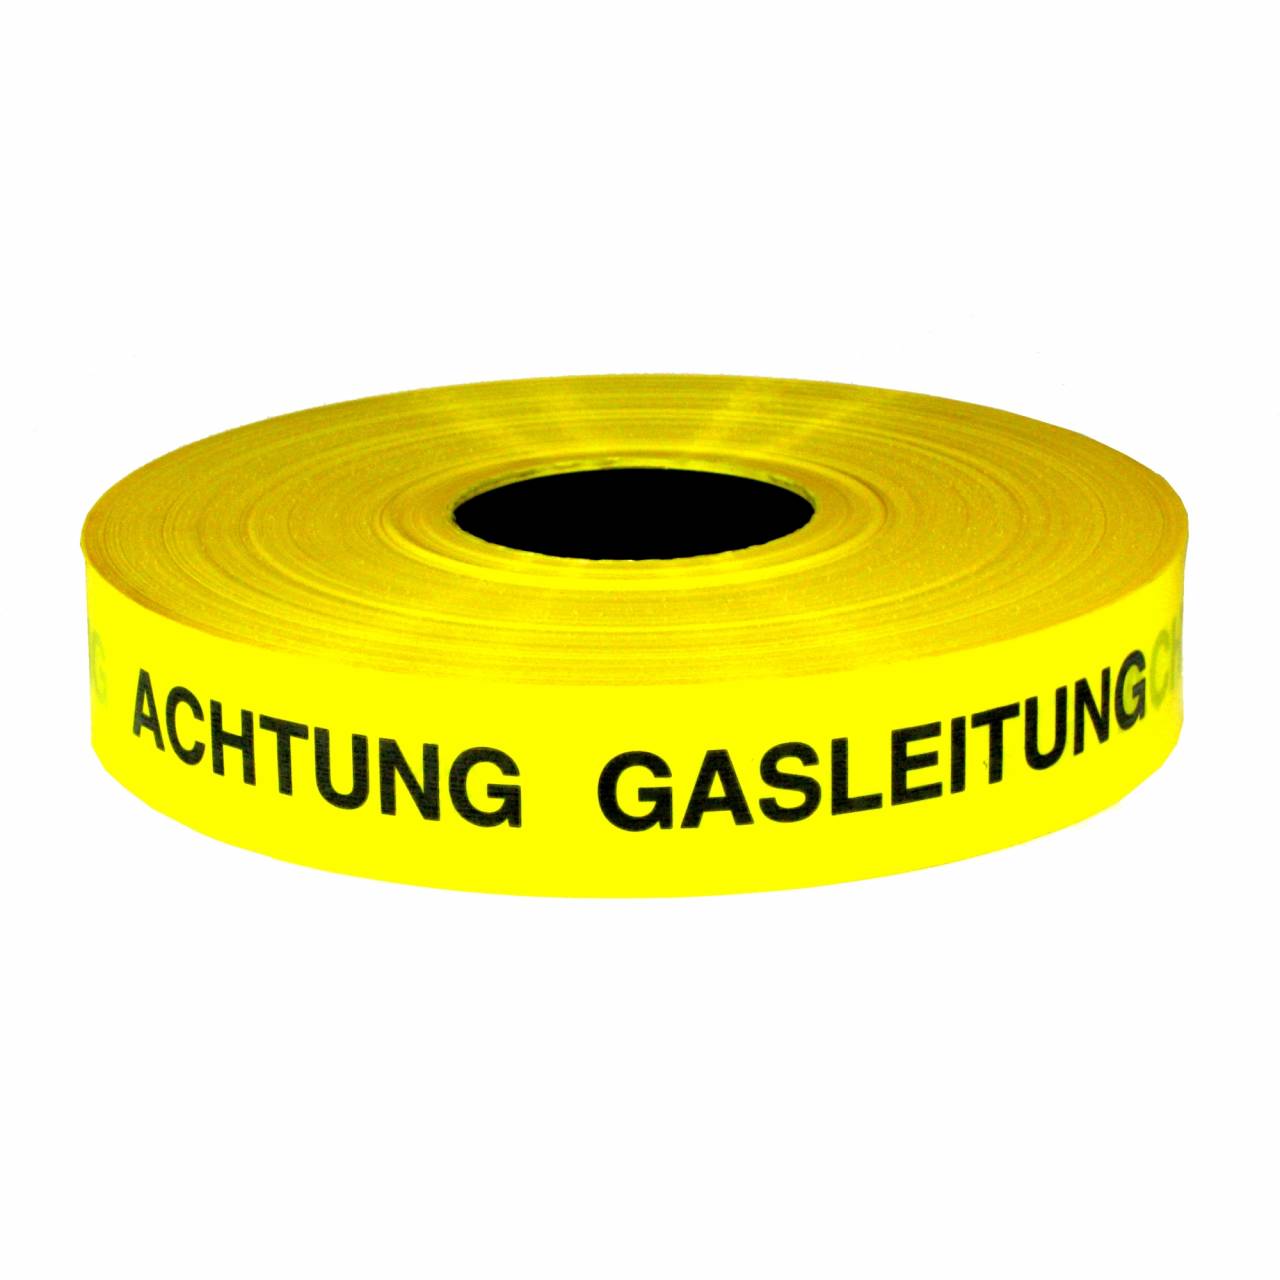 Trassenwarnband 'Achtung Gasleitung' / Rolle 40 mm x 250 m